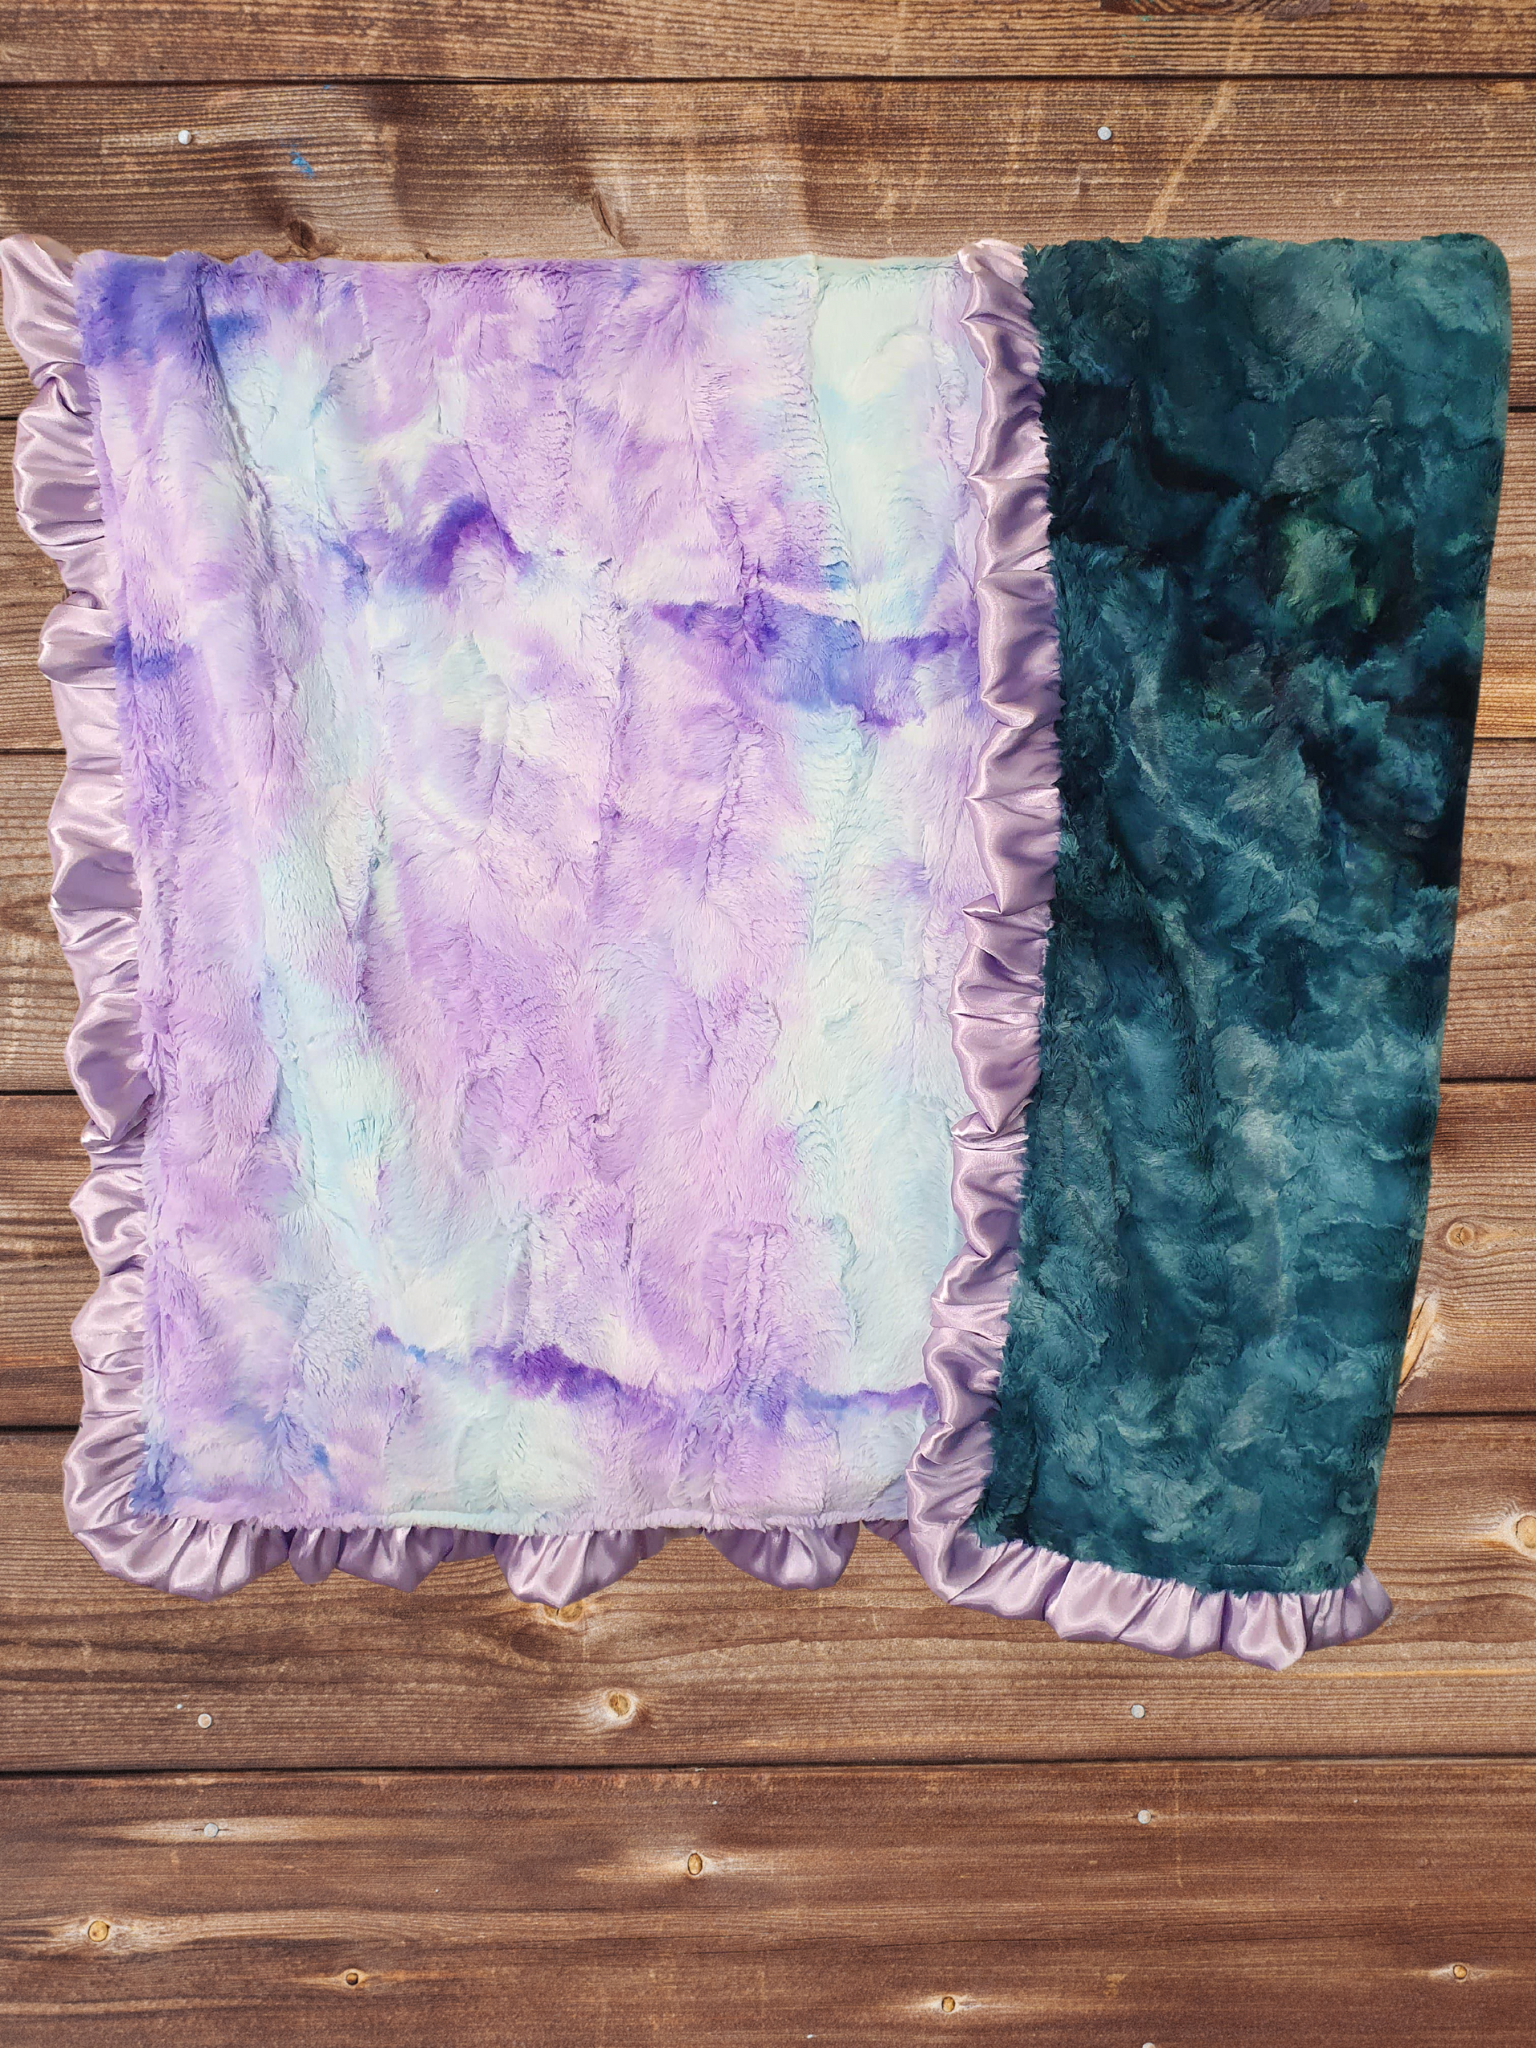 Ruffle Baby Blanket - Mermaid Minky and Mallard Galaxy Minky Blanket - DBC Baby Bedding Co 